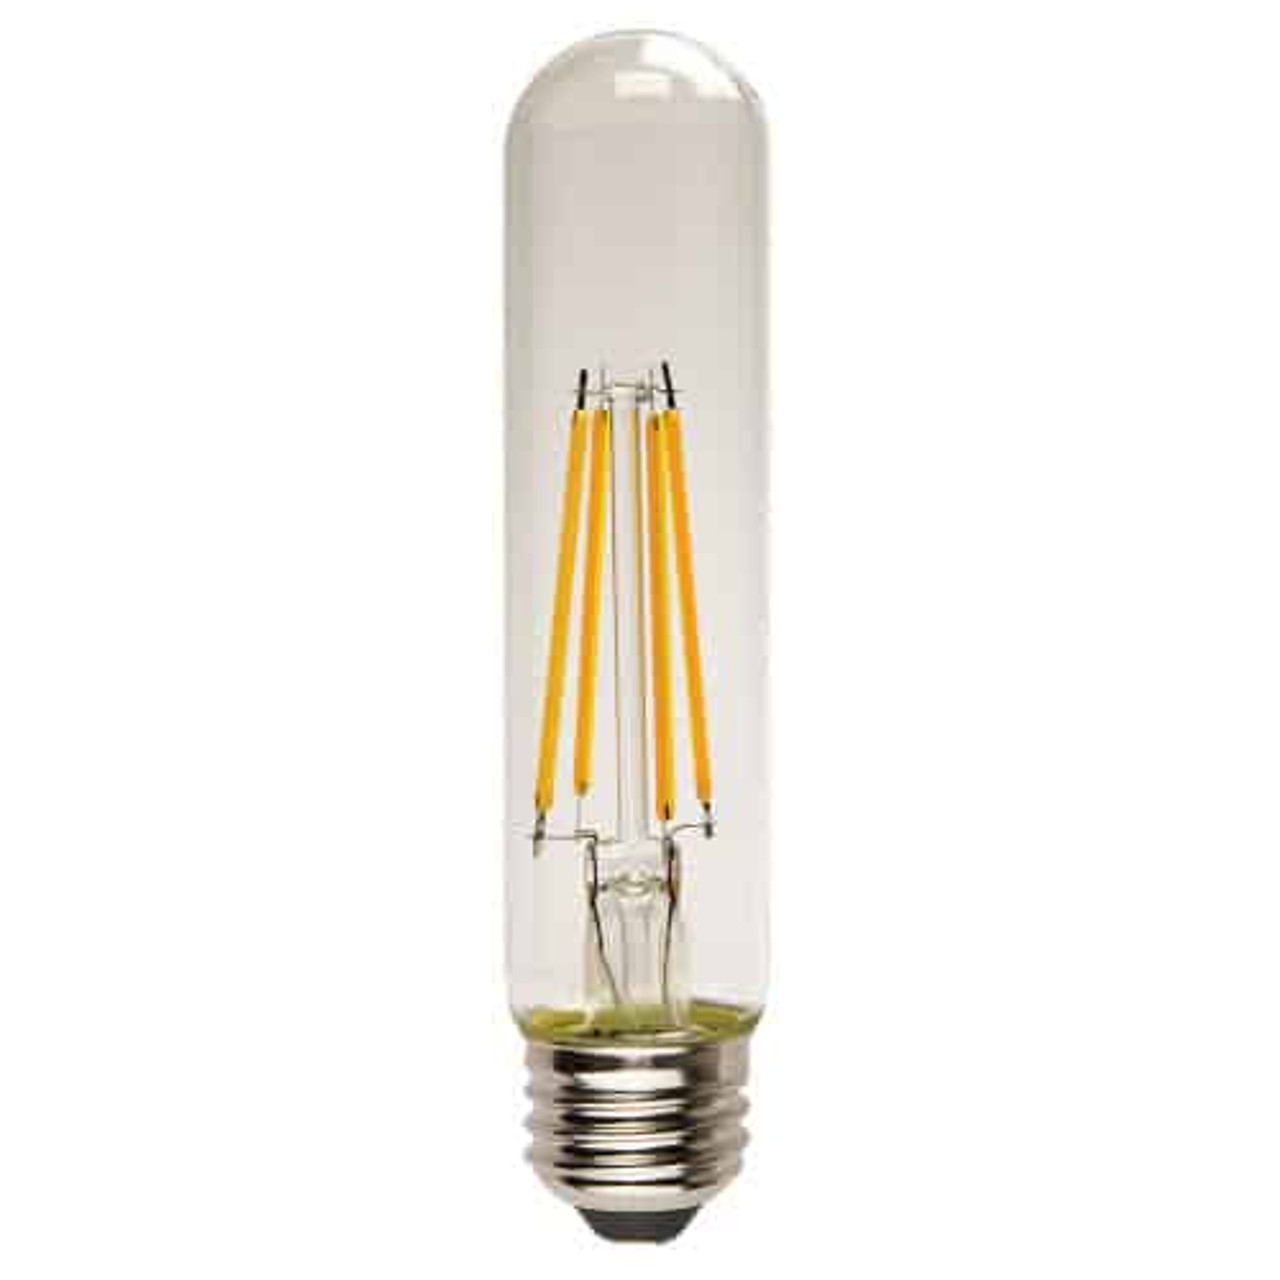 T10 LED Bulbs, Dusk to Dawn, Filament, LED LIGHTING